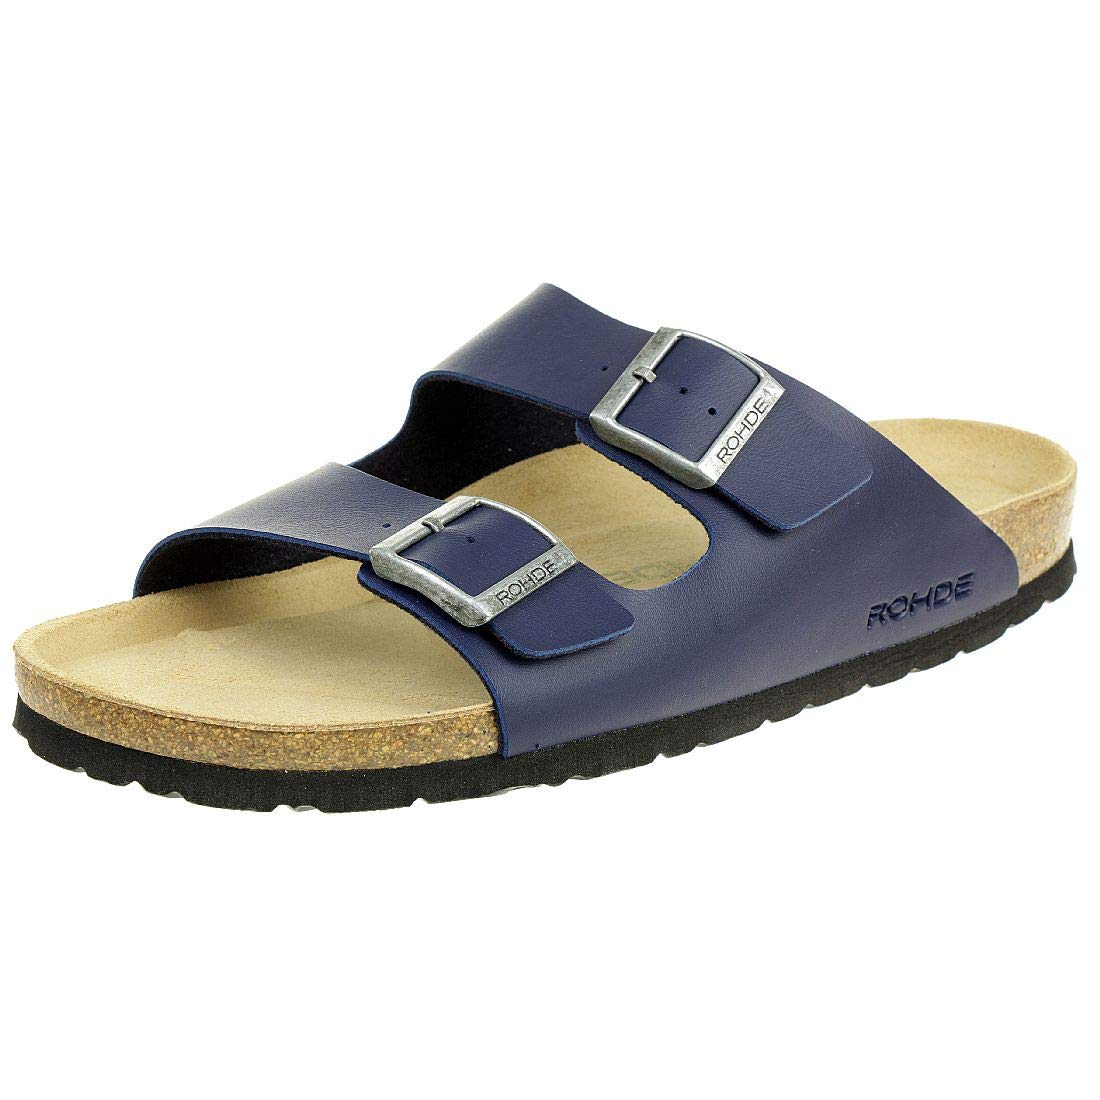 Rohde 5920 Grado Schuhe Sandalen Pantoletten Clogs, Größe:42 EU, Farbe:Blau